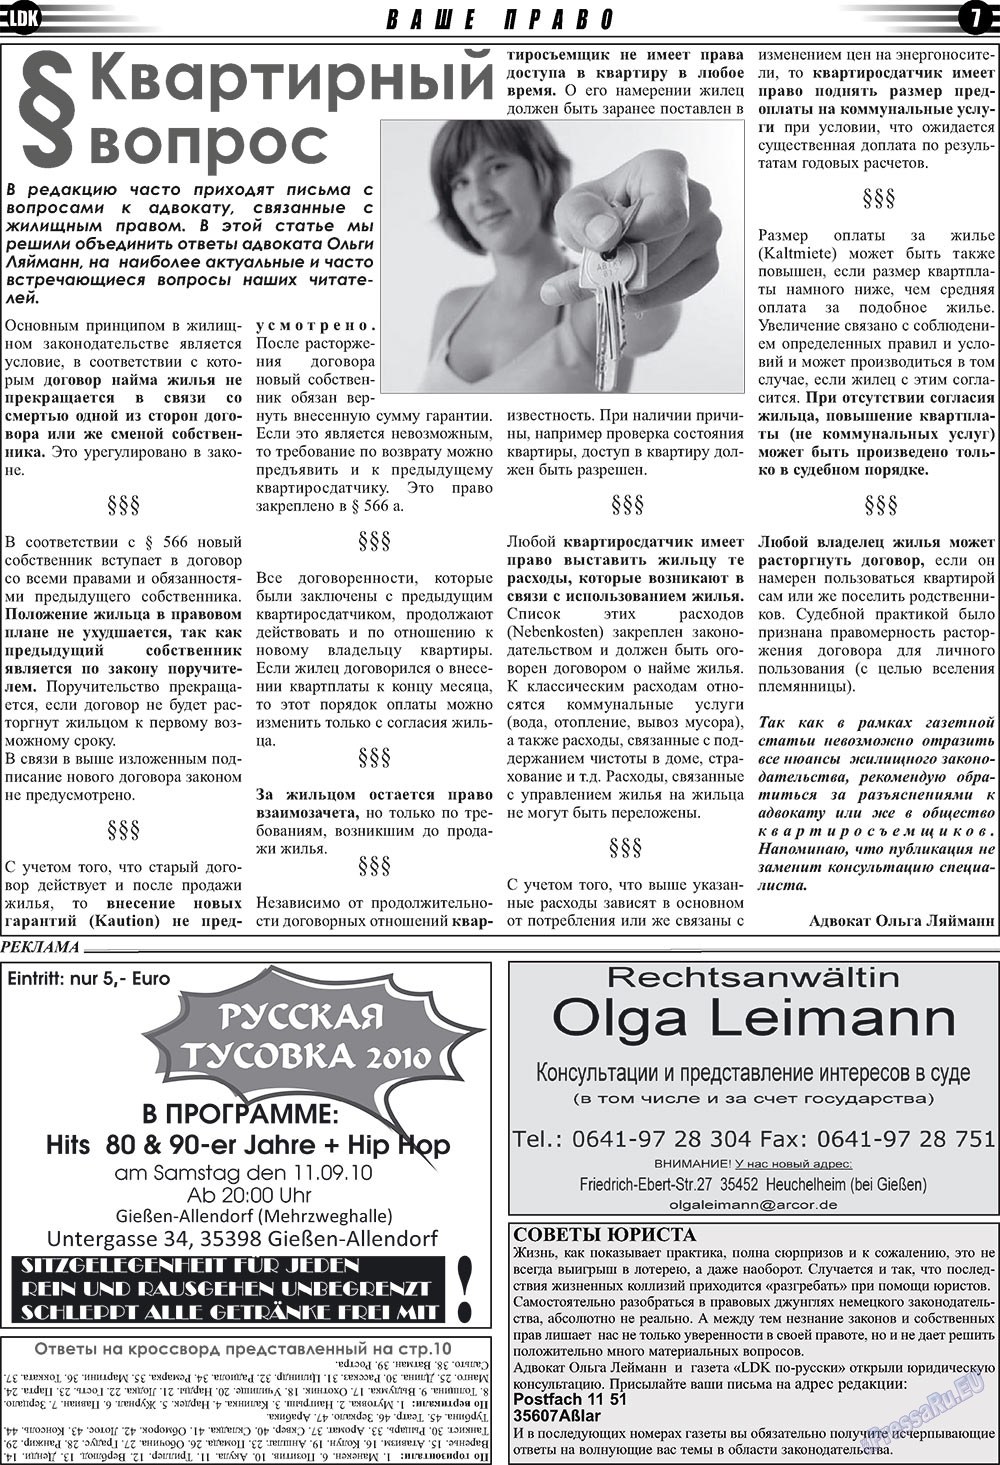 LDK по-русски, газета. 2010 №9 стр.7